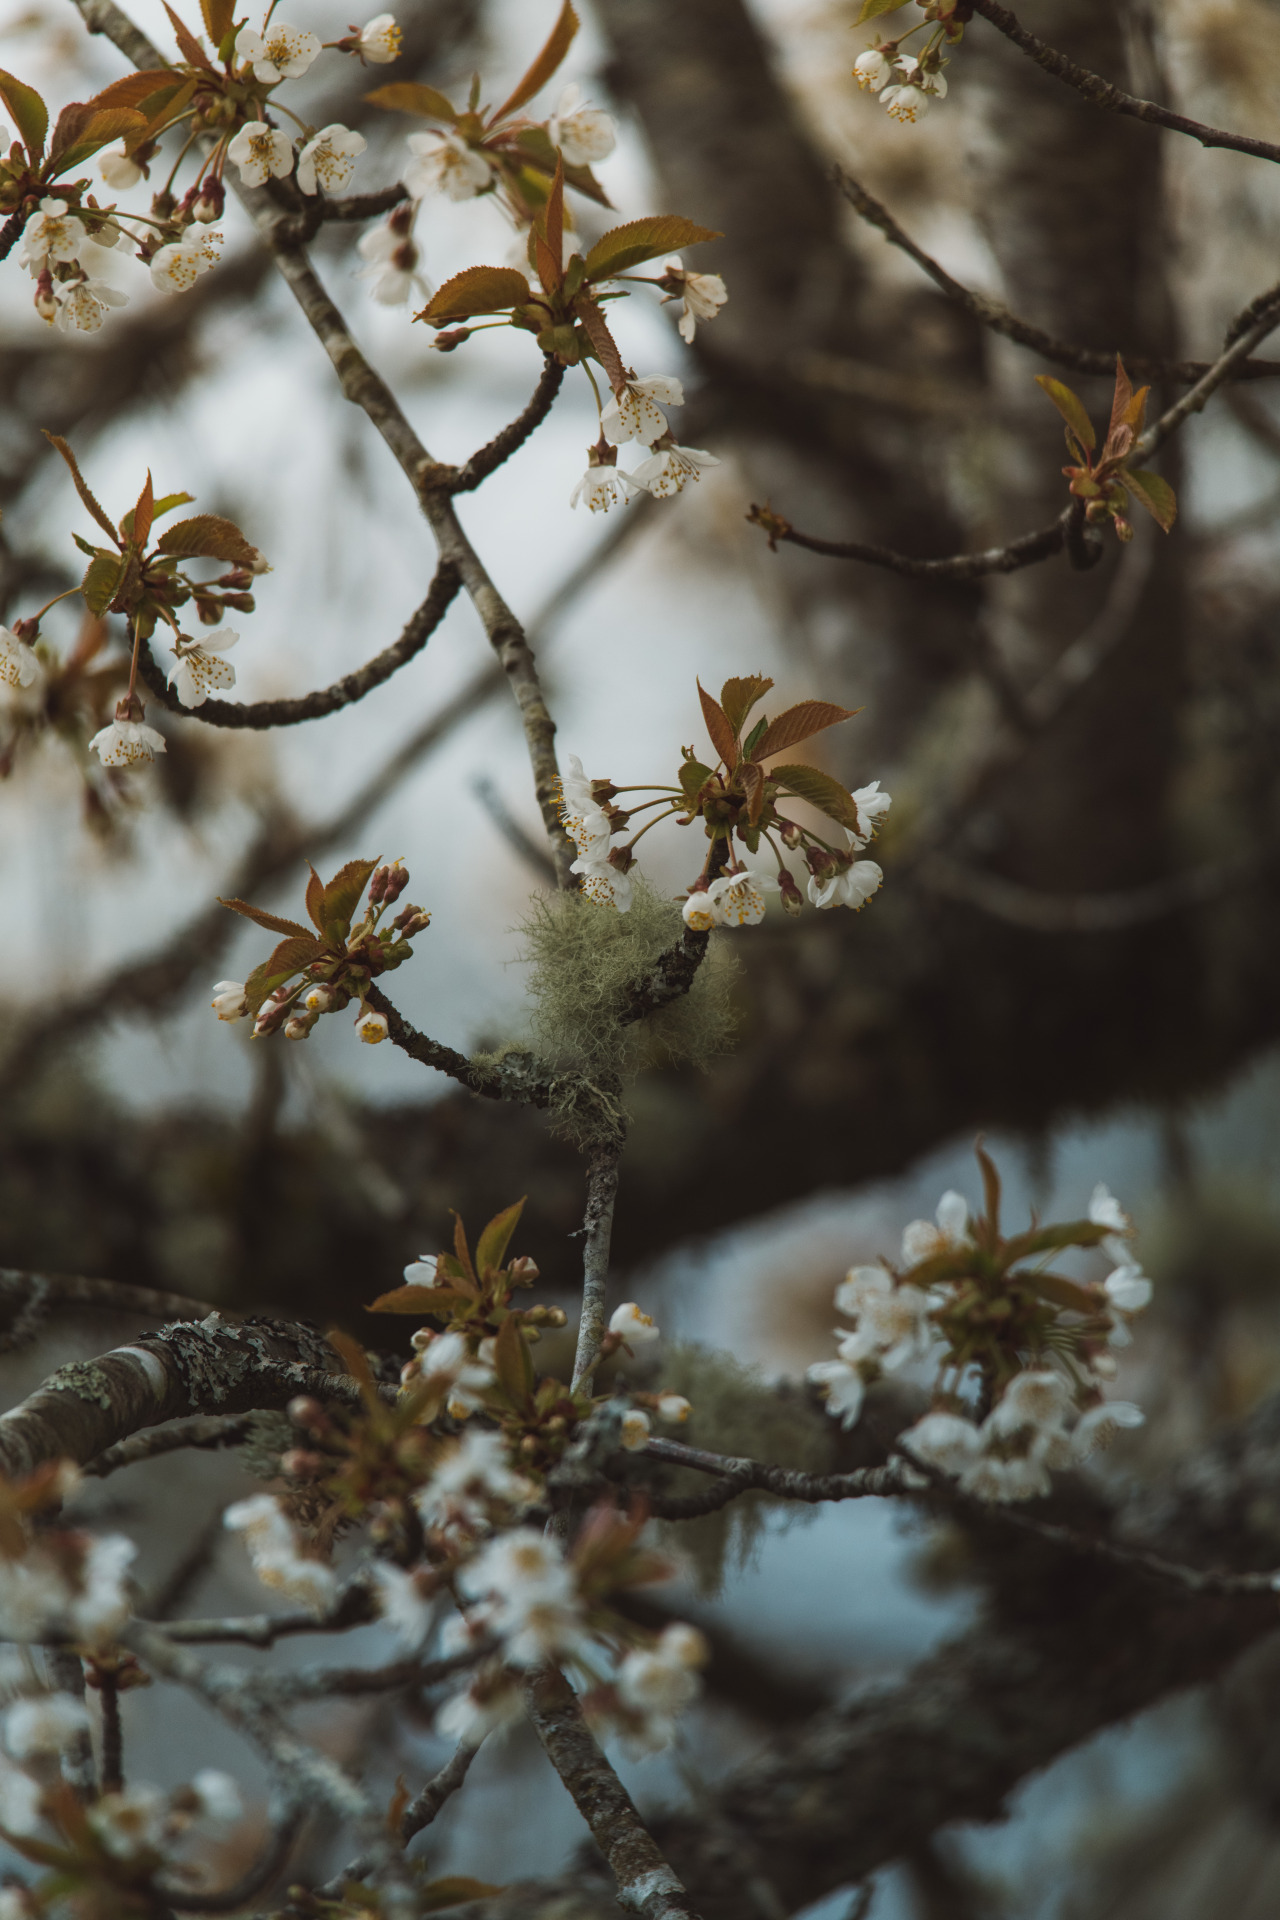 Cherry blossoms #nature#lensblr #artists on tumblr #original photographers#original photography#photography #photographers on tumblr #Washington#vsco#pacific northwest#p